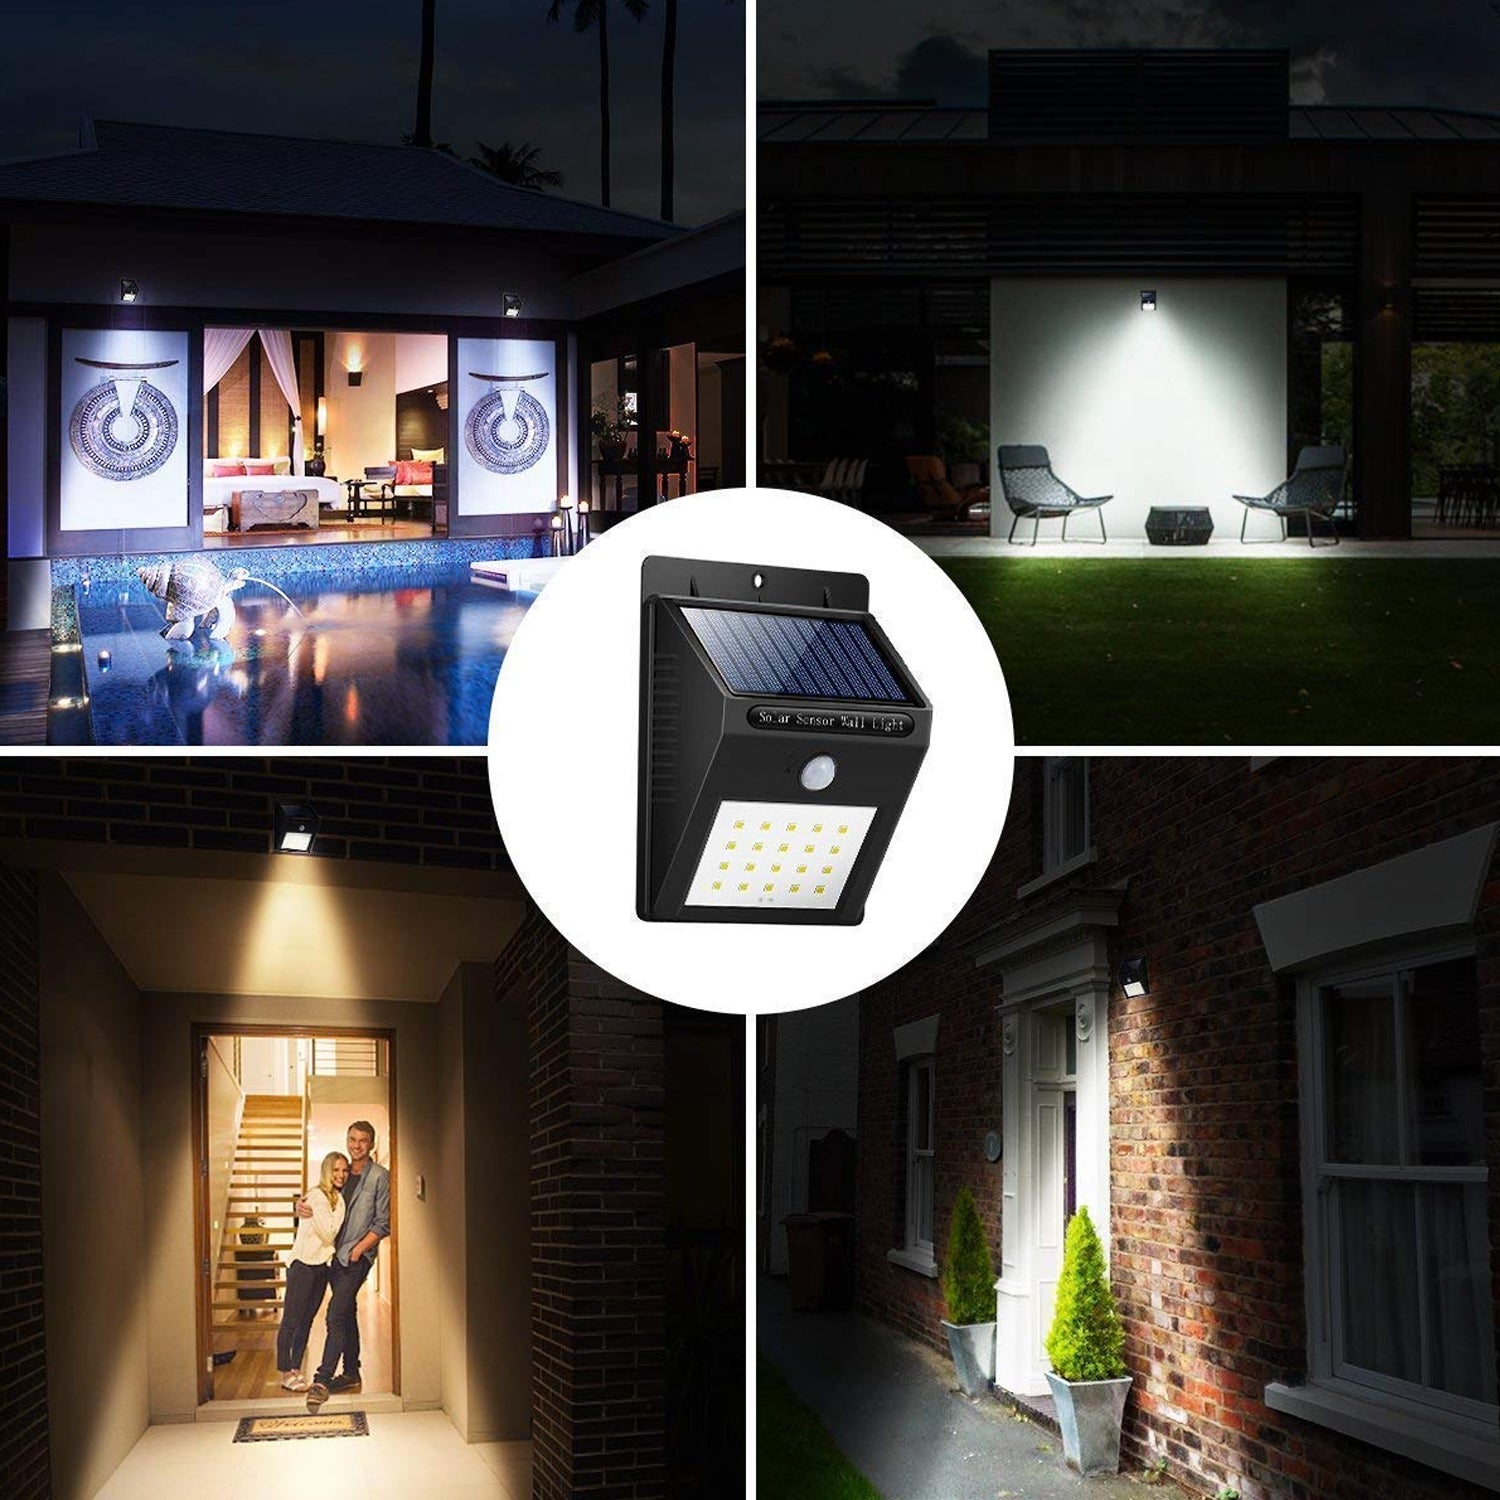 6608 White Solar Wireless Security Motion Sensor LED Night Light for Home Outdoor/Garden Wall. 